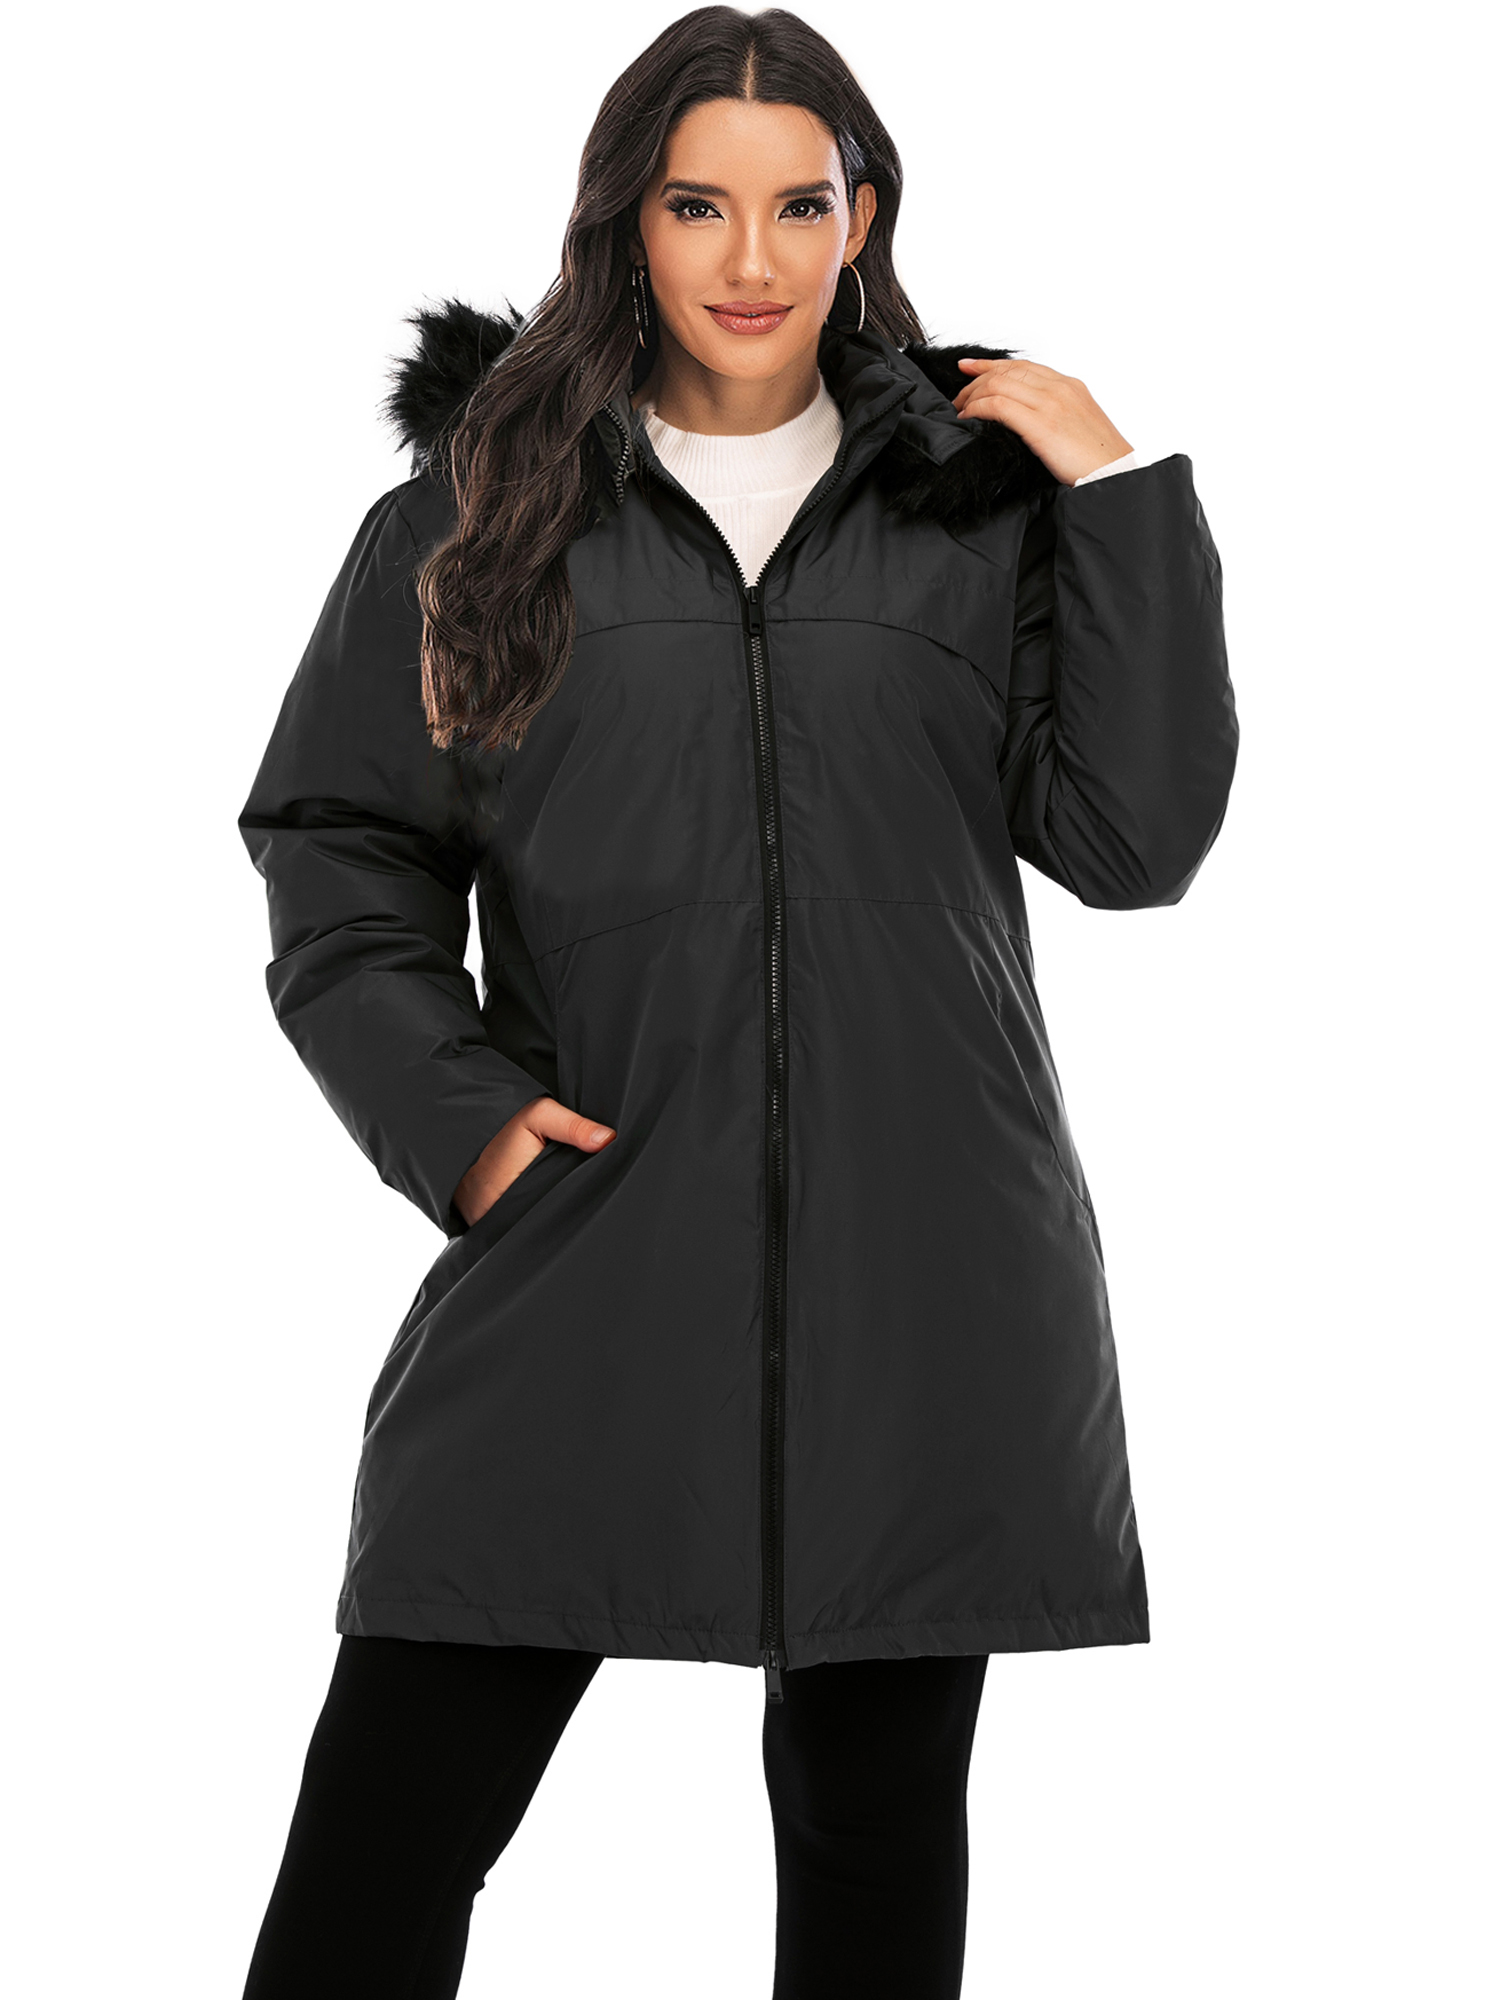 LELINTA Women Plus Size Winter Coats Hooded Warm Puffer Lined Jacket Zip Parka Raincoat Active Outdoor Trench Long Coats - image 1 of 7